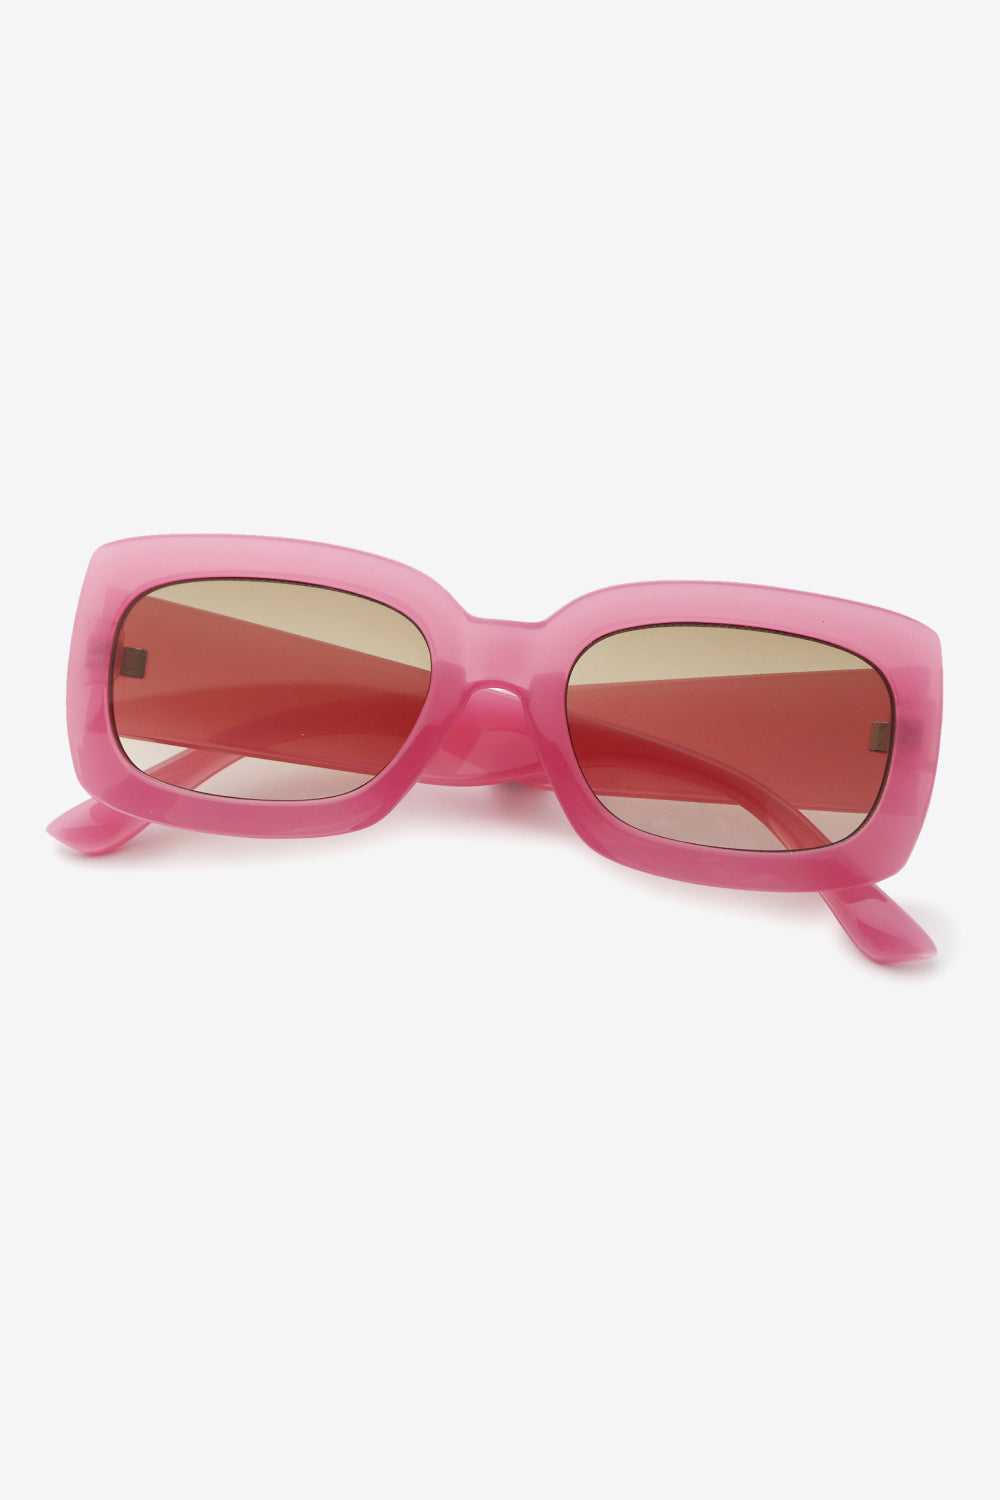 Polycarbonate Frame Rectangle Sunglasses - Sunglasses - FITGGINS